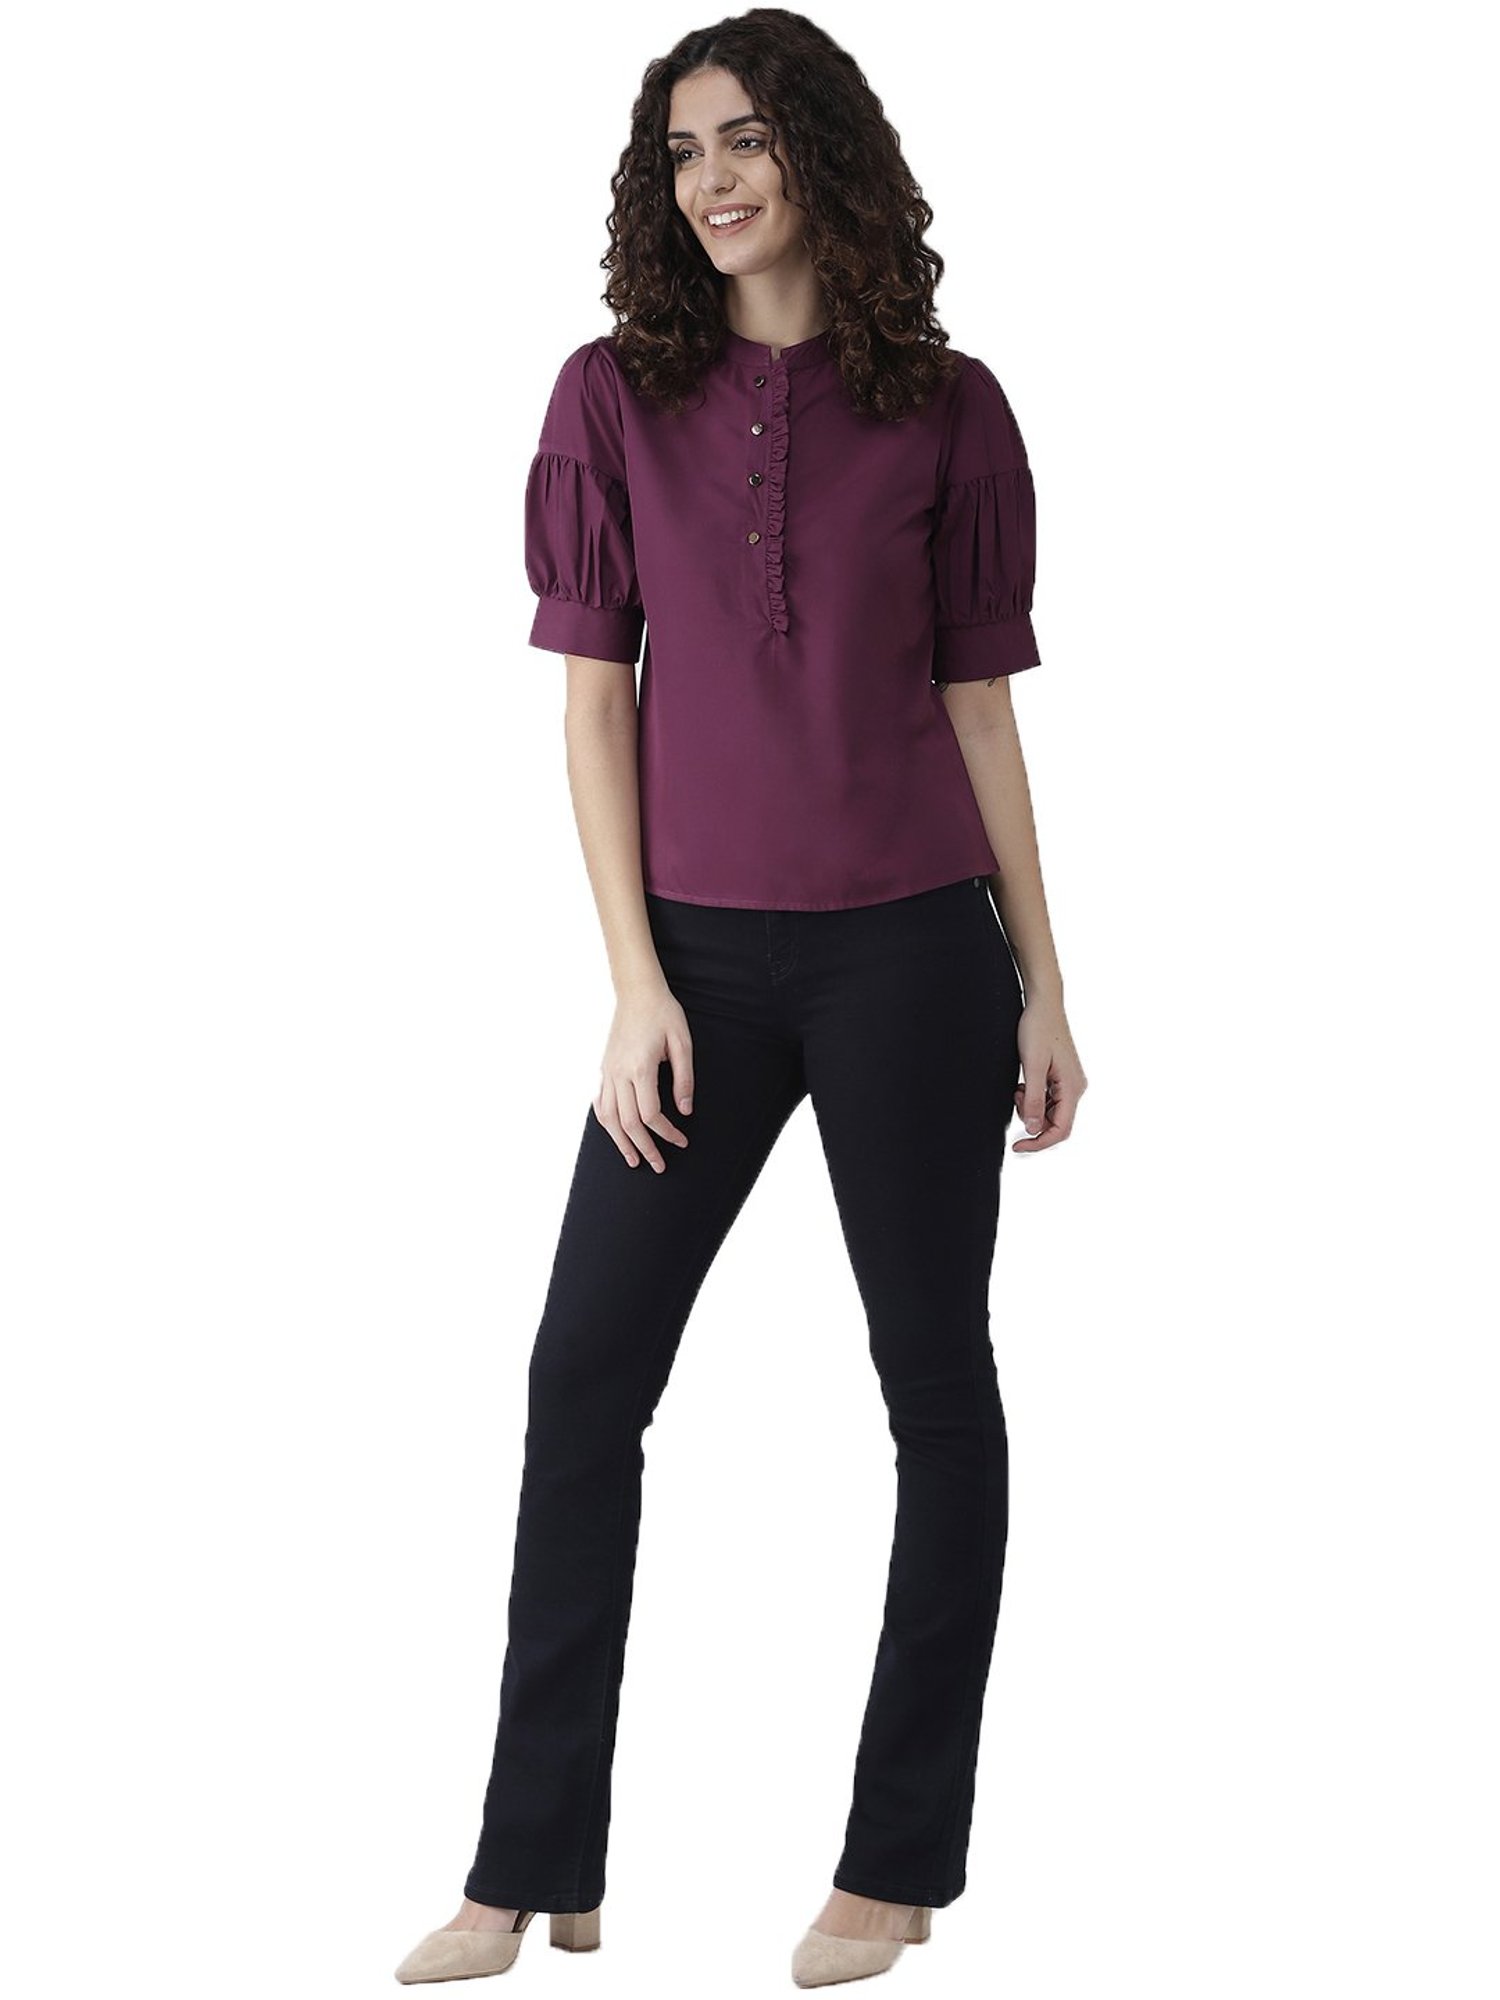 Owning Up Ripped Tie Dye Skinny Jeans - Black/Purple | Fashion Nova, Jeans  | Fashion Nova